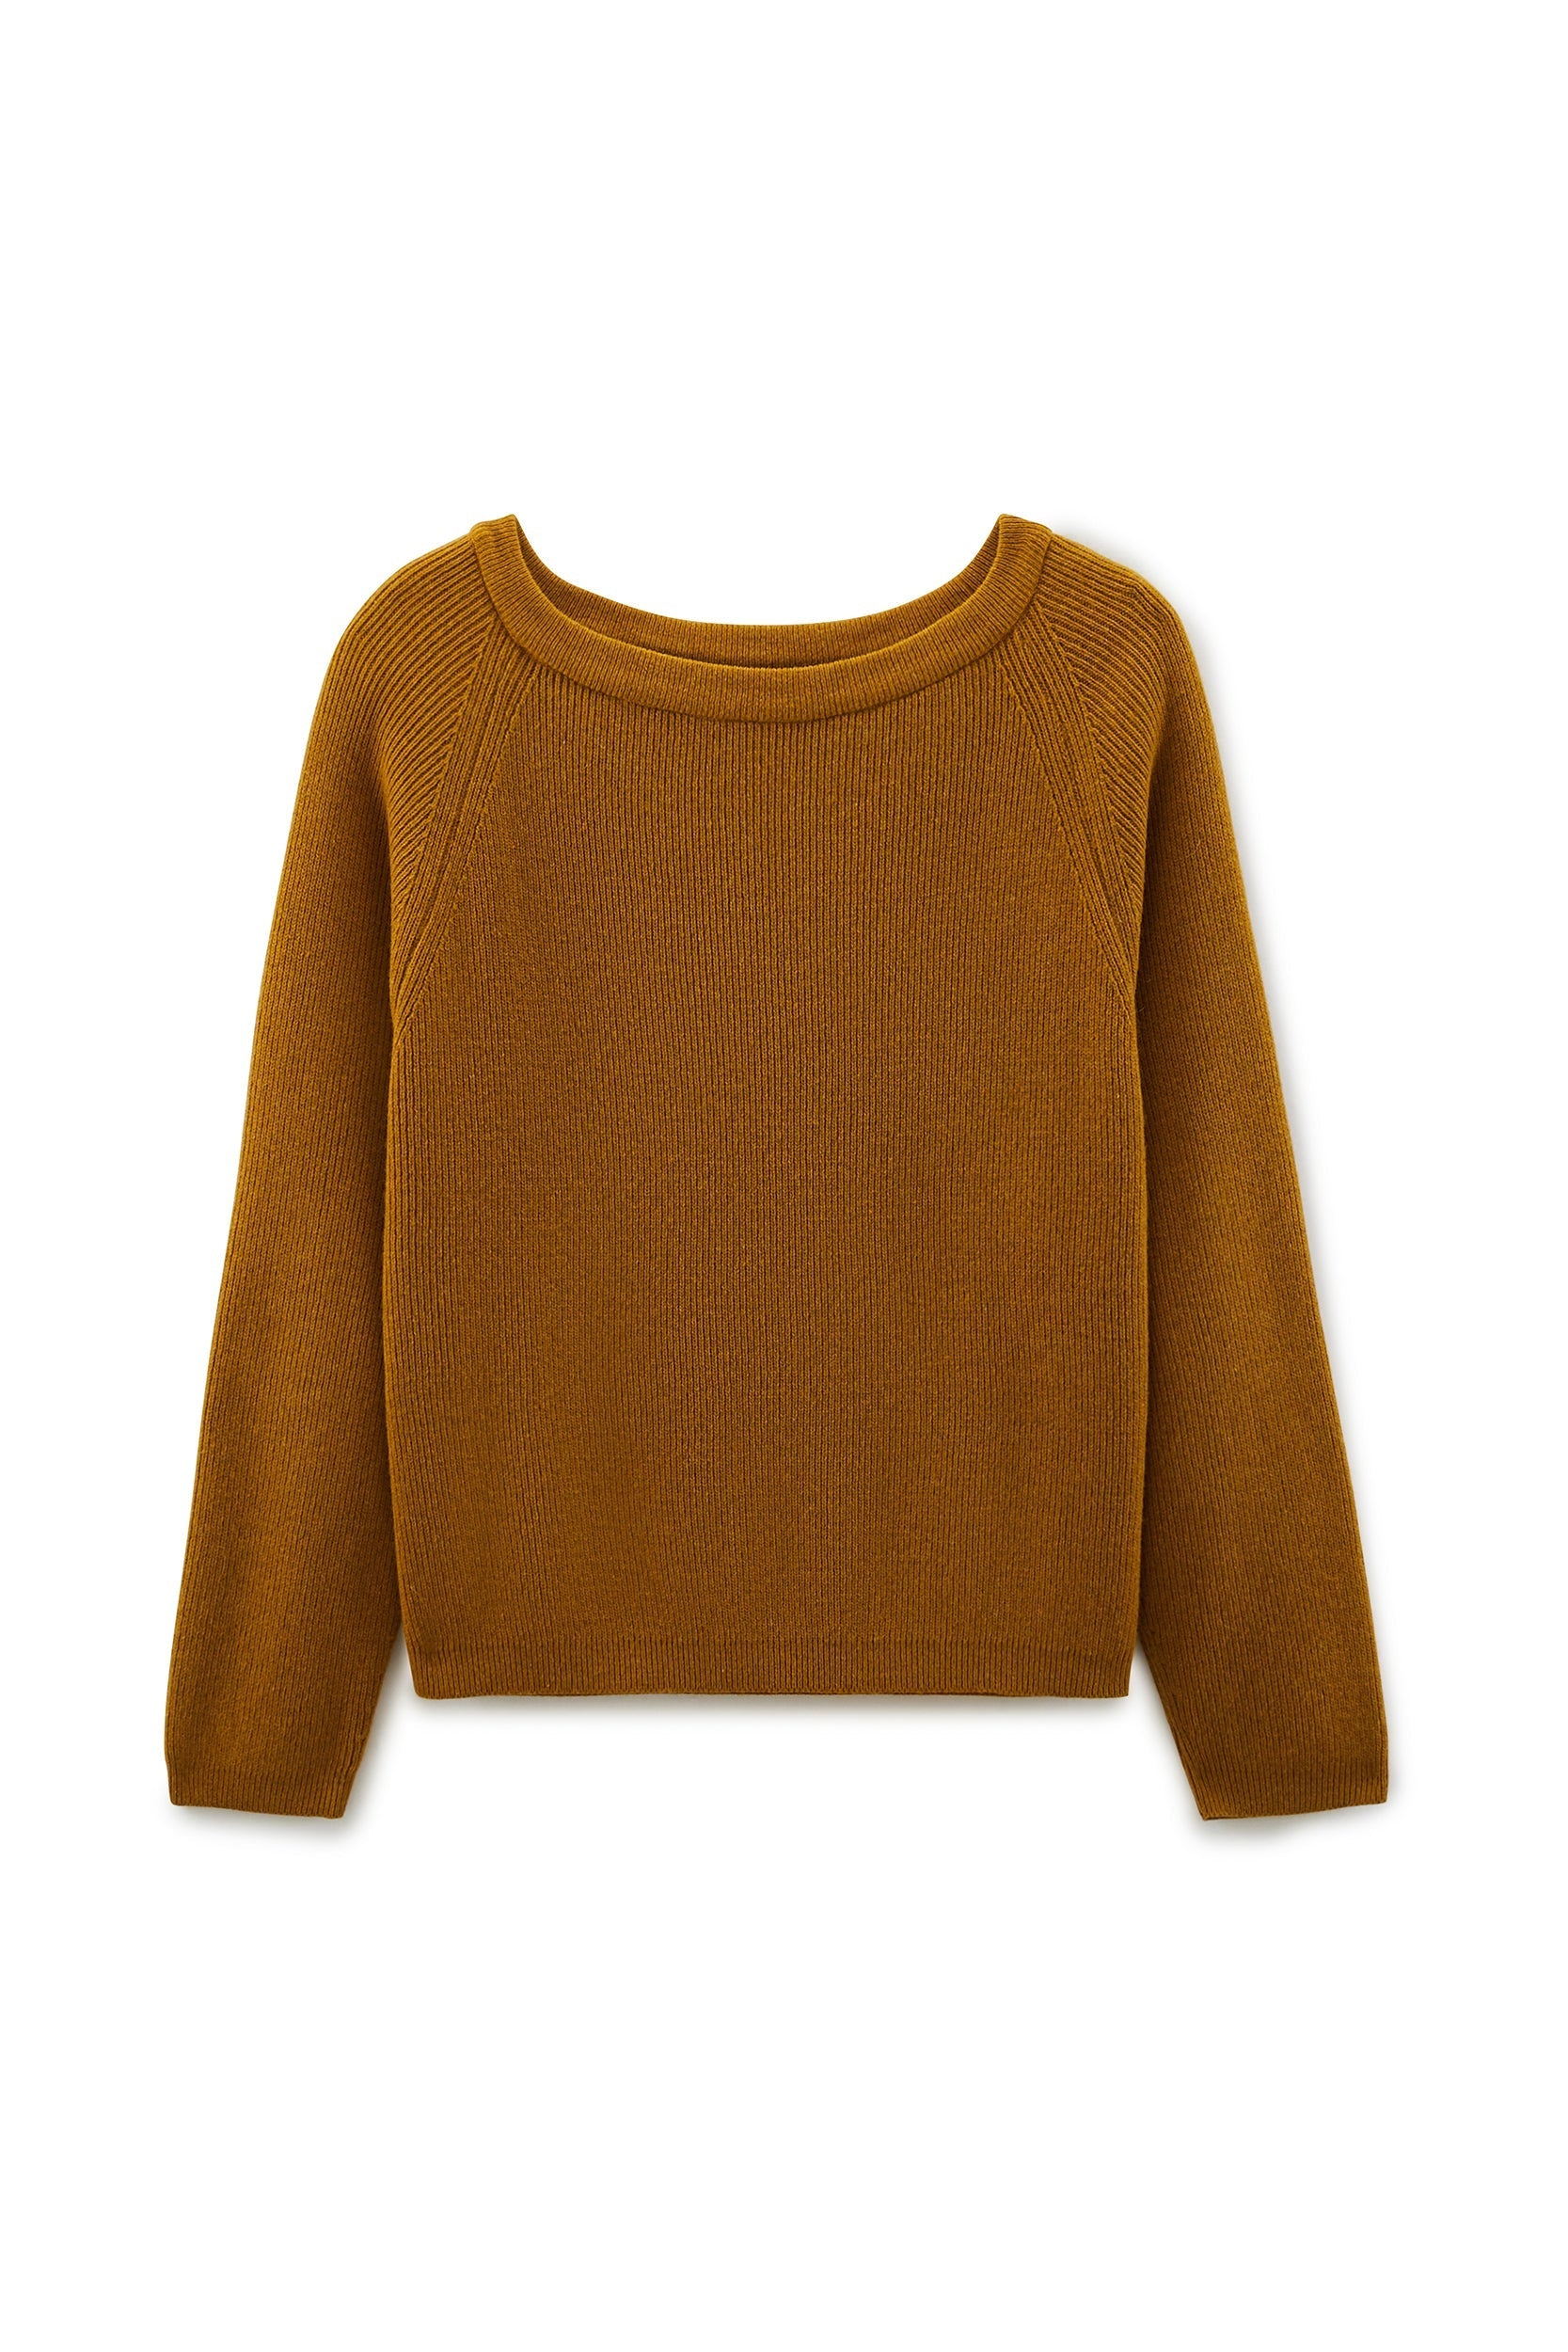 mustard sketch sweater